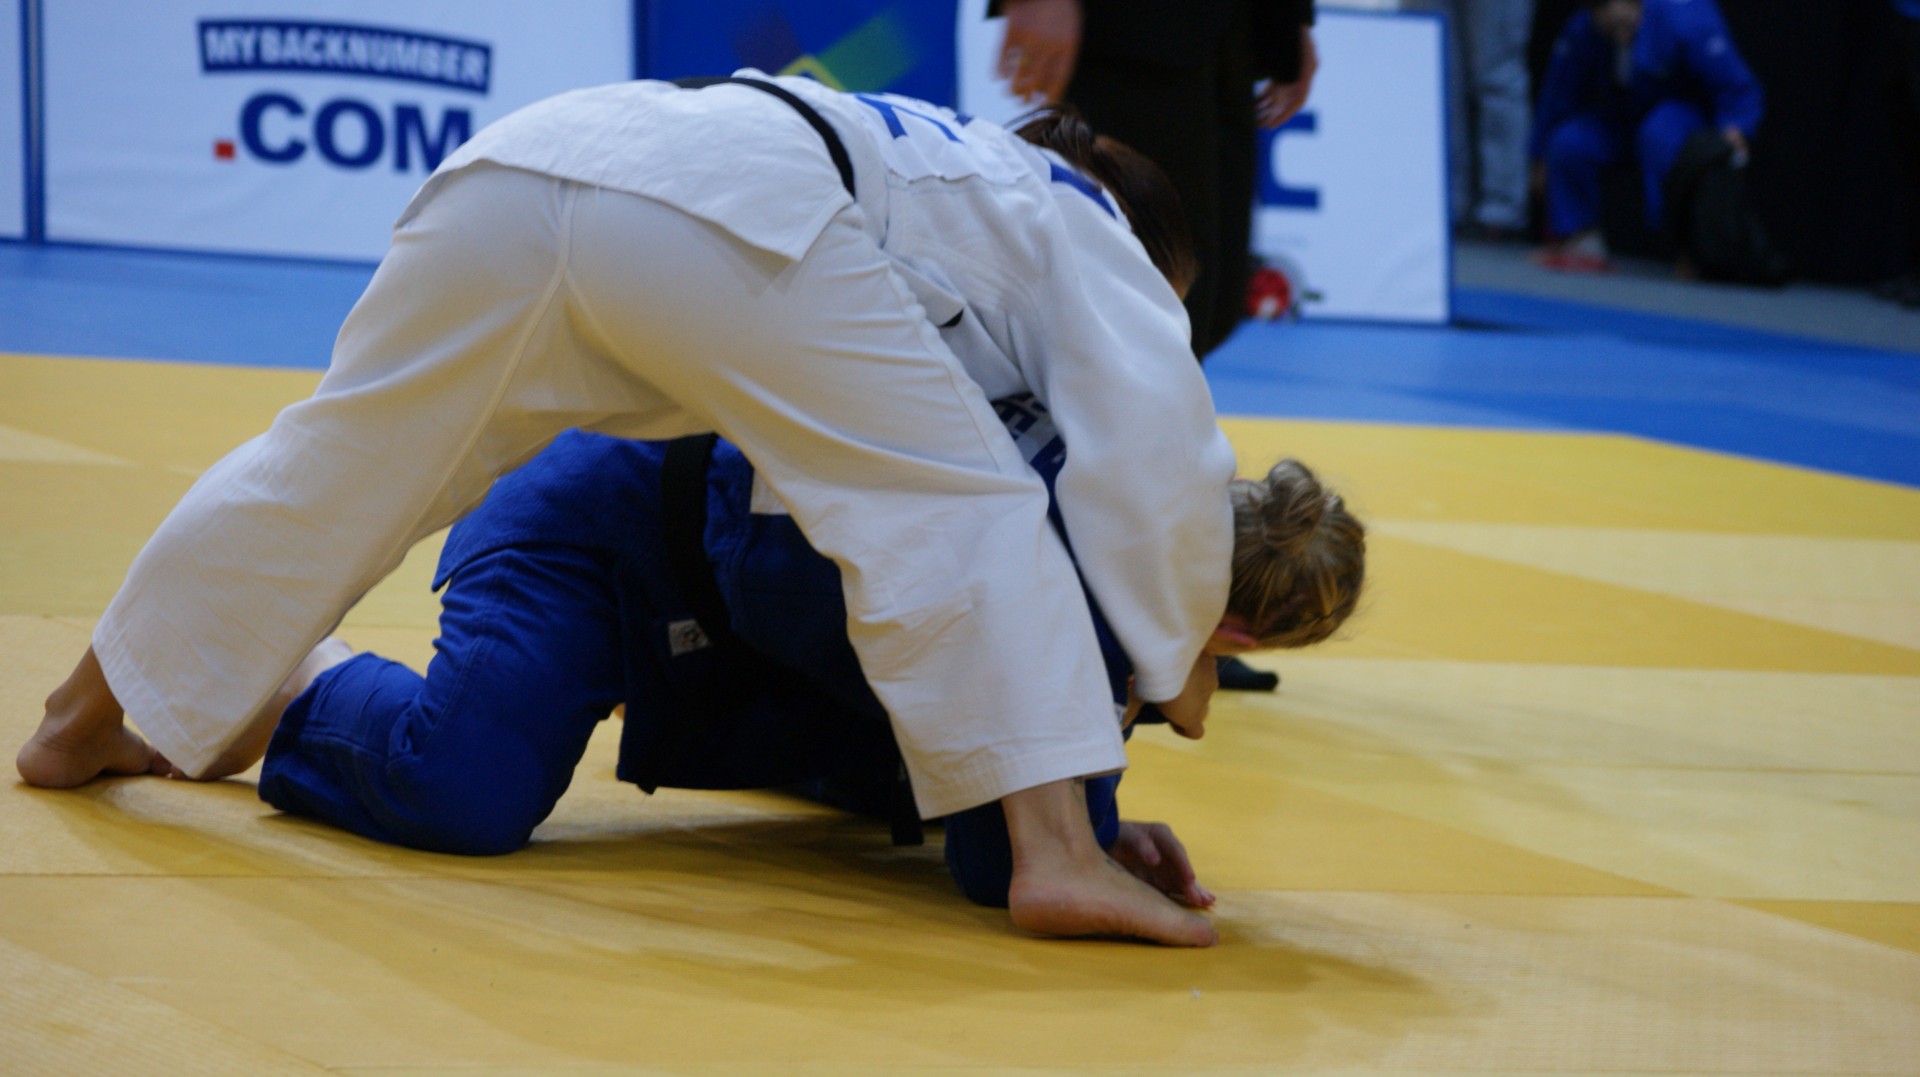 Puchar Swiata Judo Warszawa 2012 (407).JPG